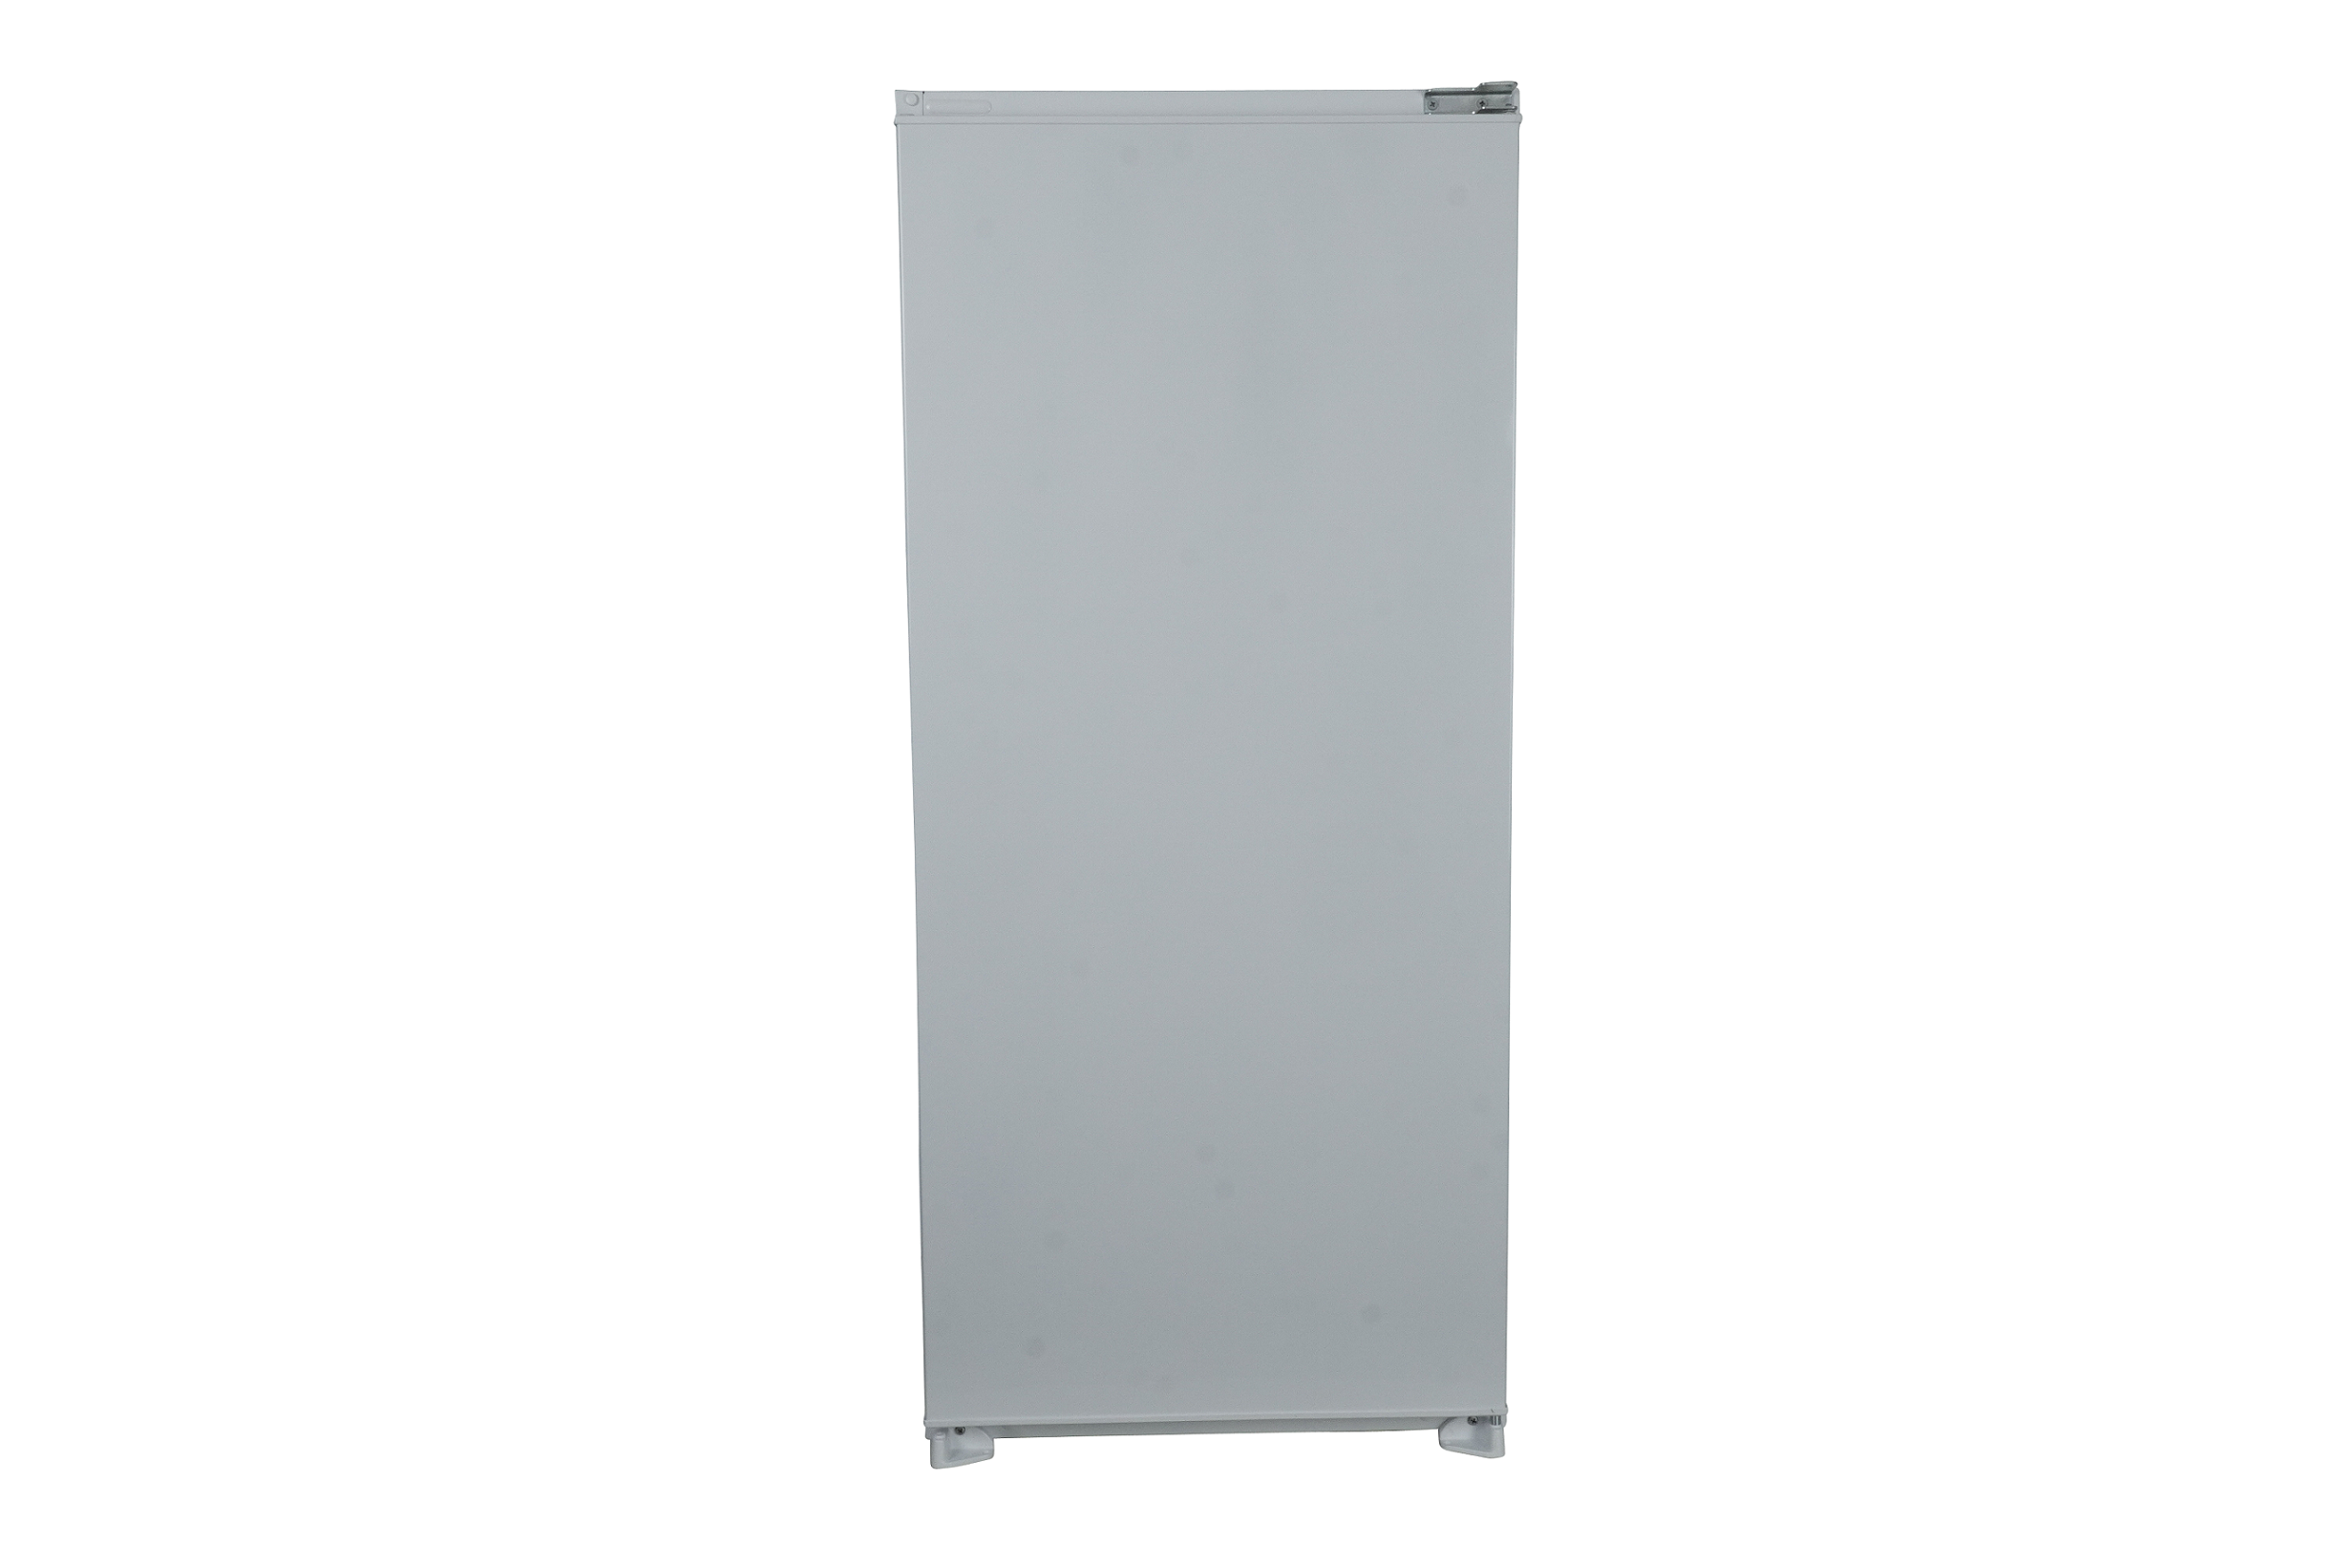 respekta refrigerator built-in refrigerator freezer trailing hinges 122 cm